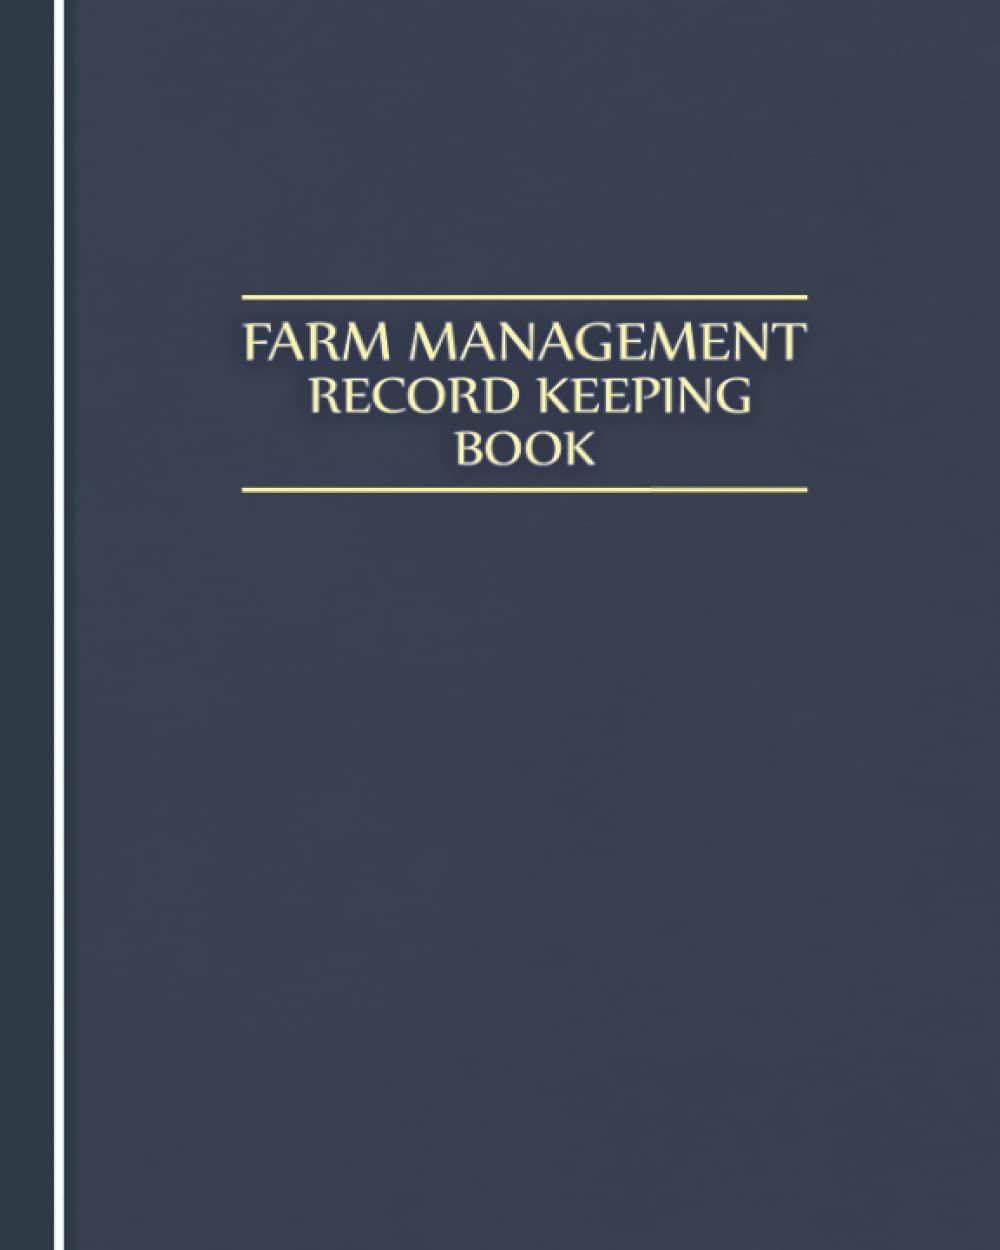 farm management record keeping book 1st edition rida sky logs b0991gdtcb, 979-8532630291